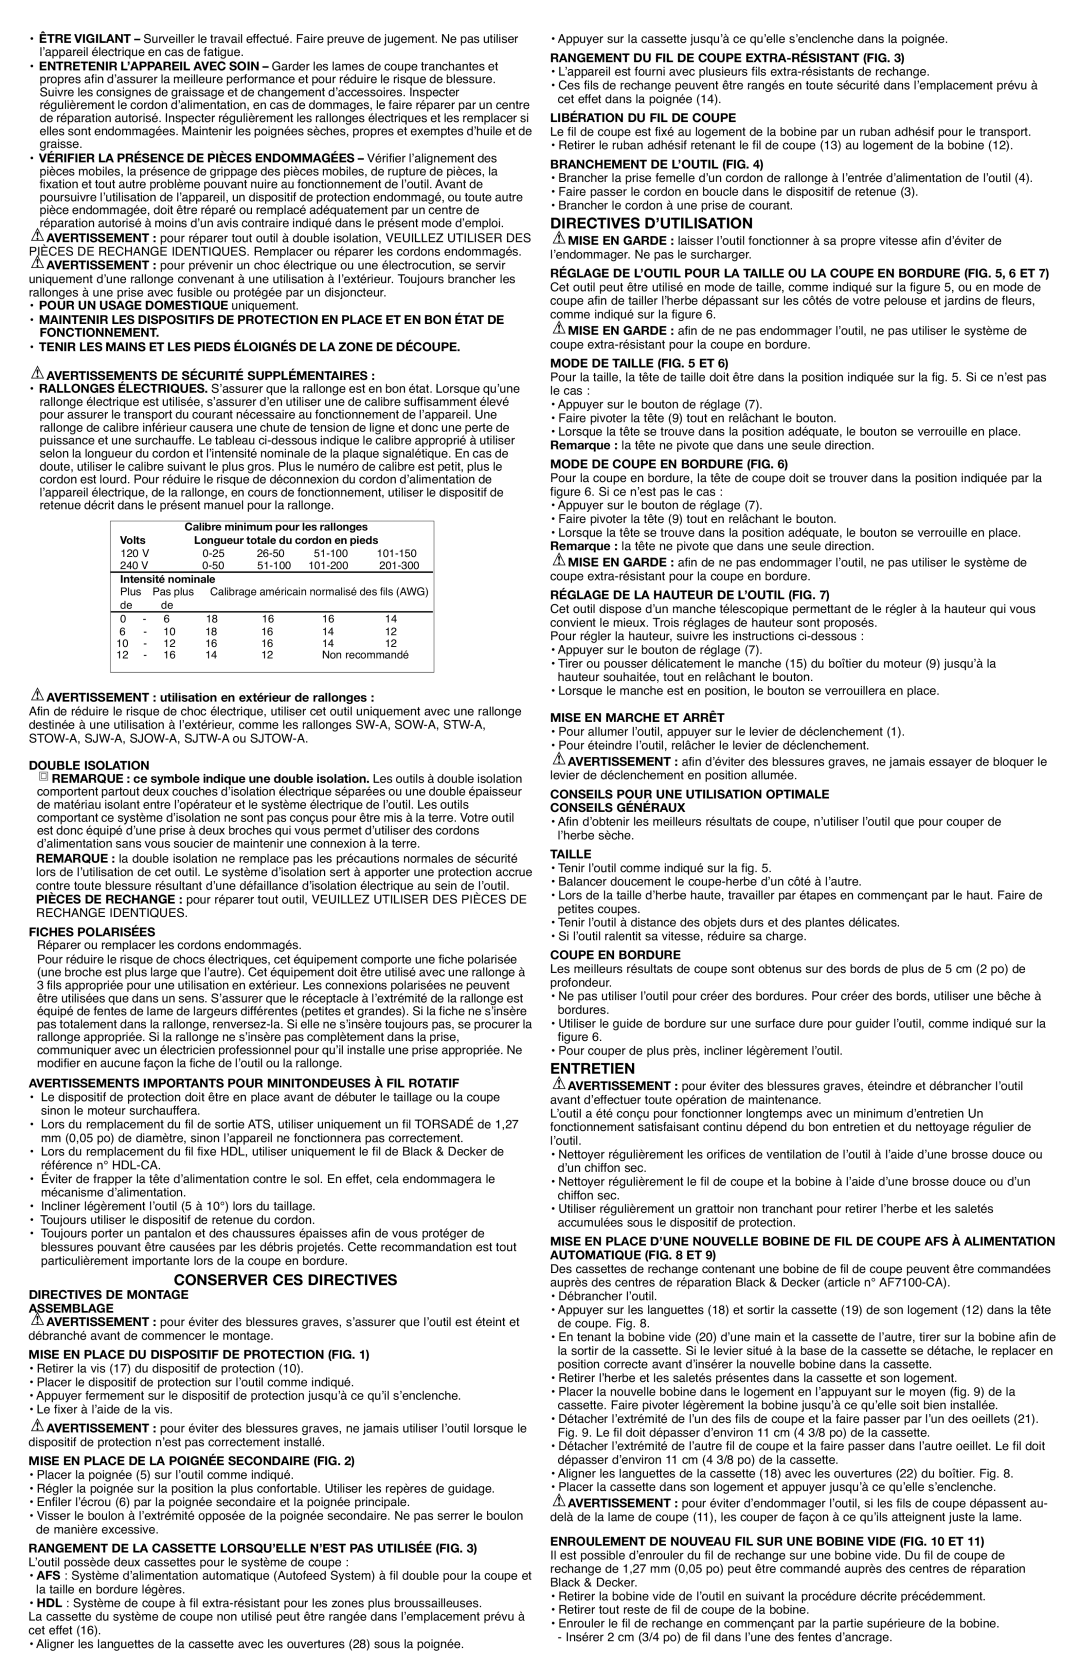 Cobra Electronics ST7100-CA instruction manual Conserver Ces Directives, Directives D’Utilisation, Entretien 